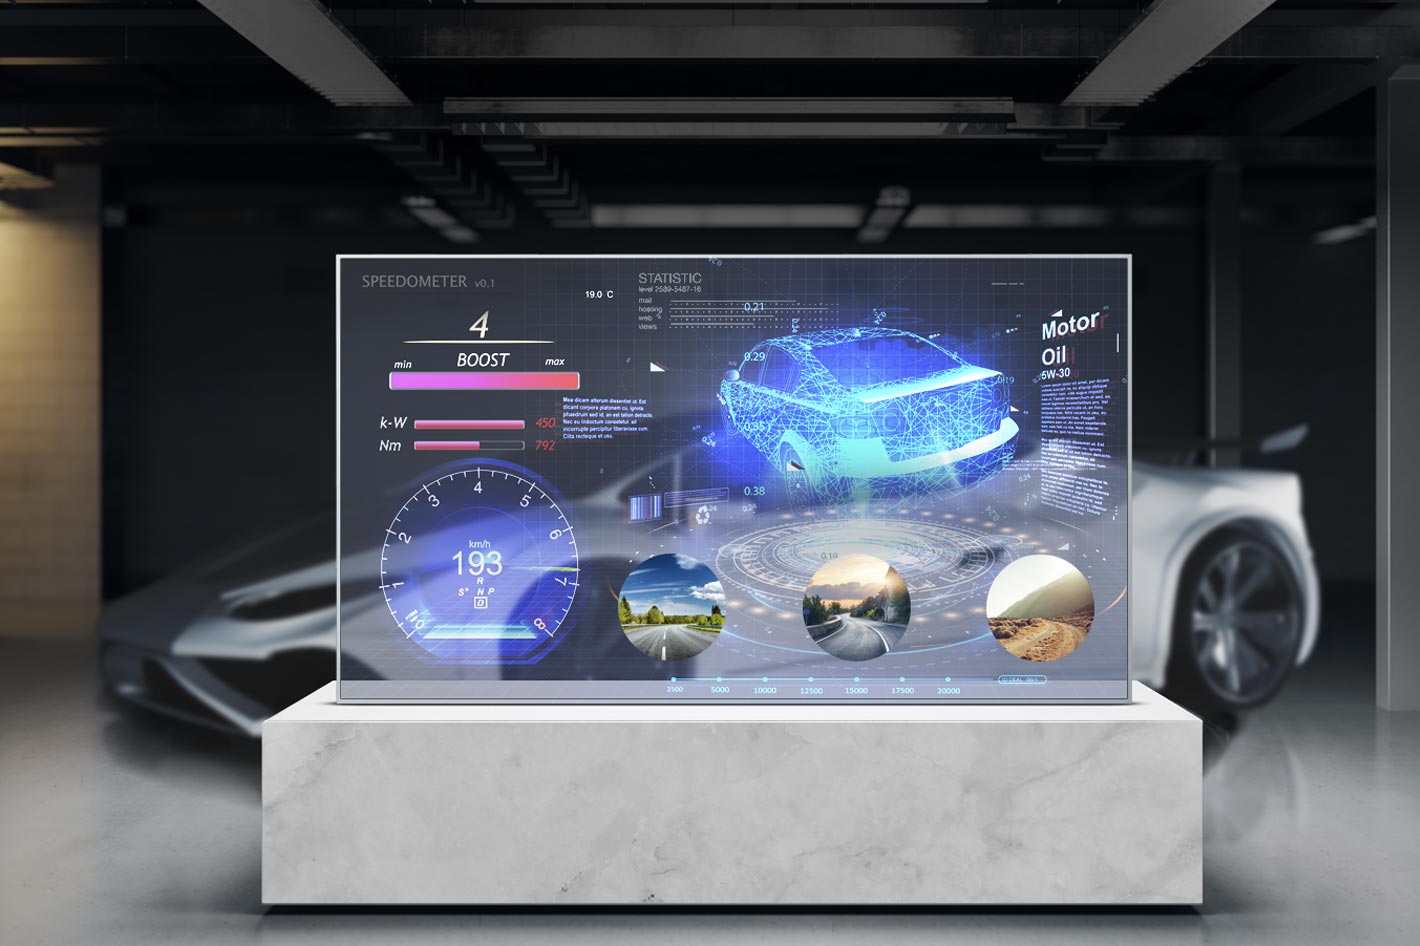 LG Display shows Transparent OLED display at CES 2021